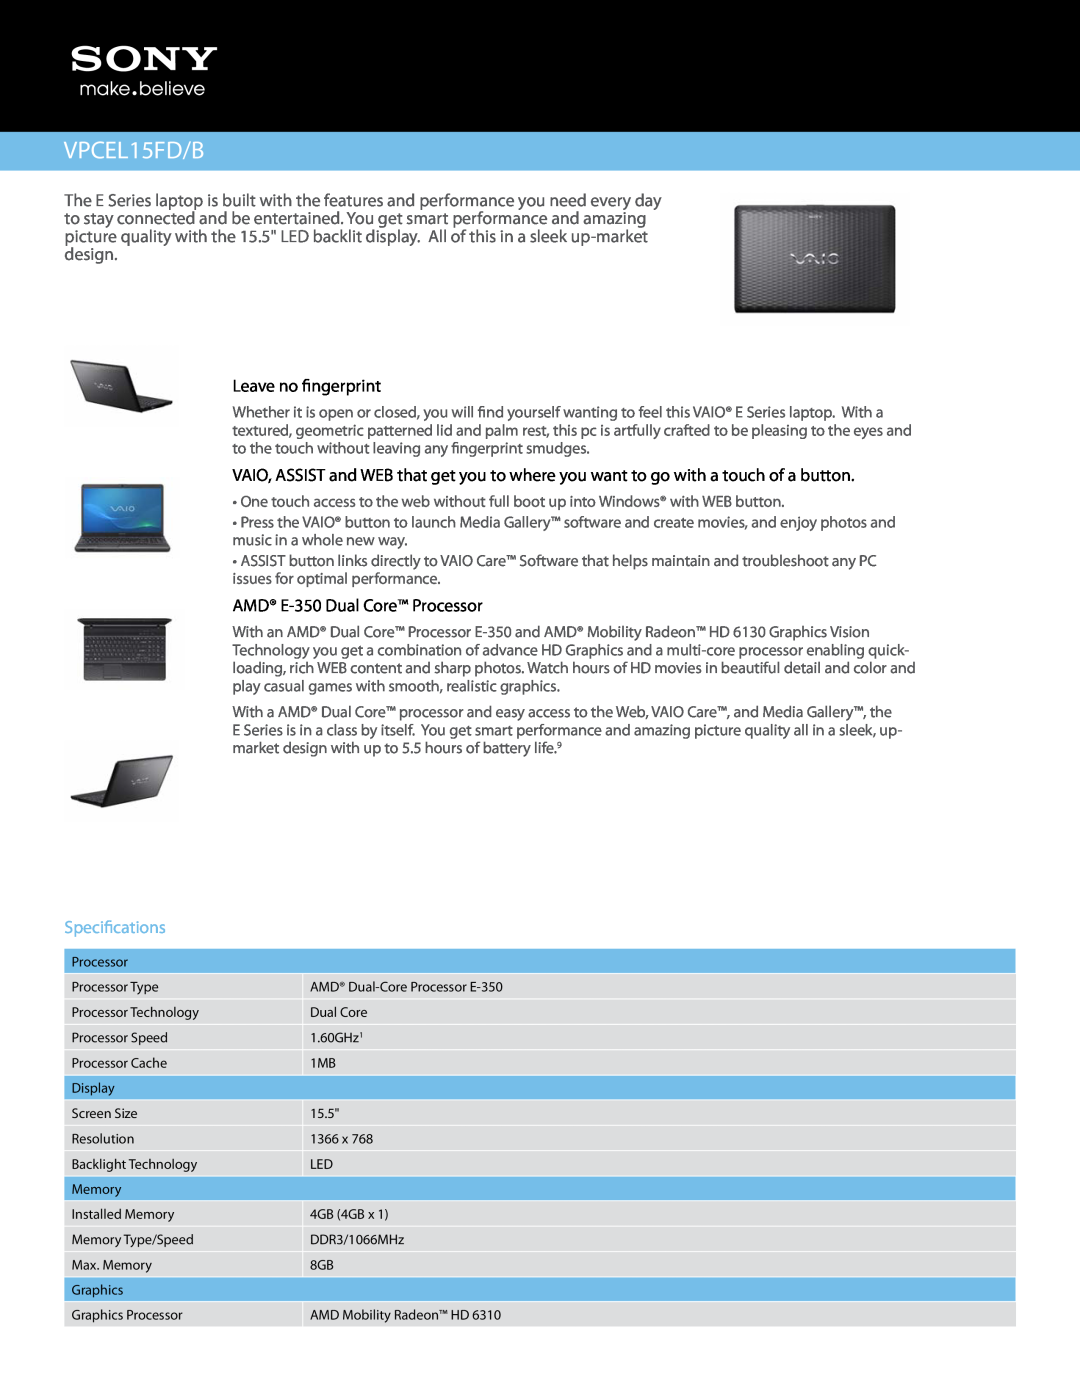 Sony VPCEL15FD/B manual Leave no fingerprint, AMD E-350 Dual Core Processor, Specifications 